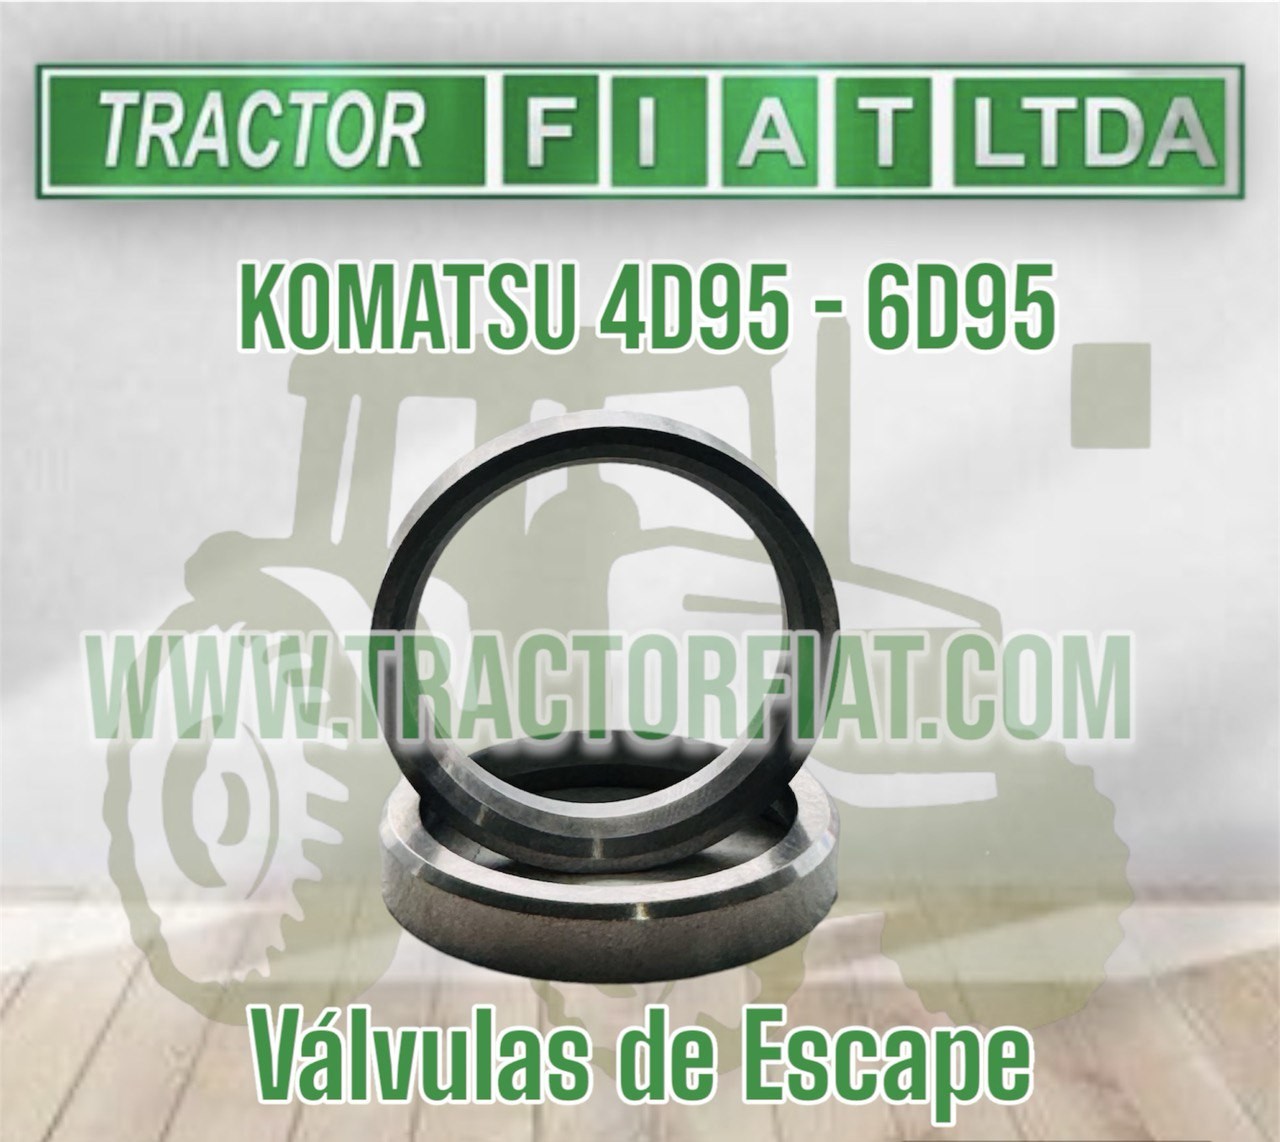 ASIENTO DE VALVULA DE ESCAPE - MOTOR KOMATSU  6D95/4D95